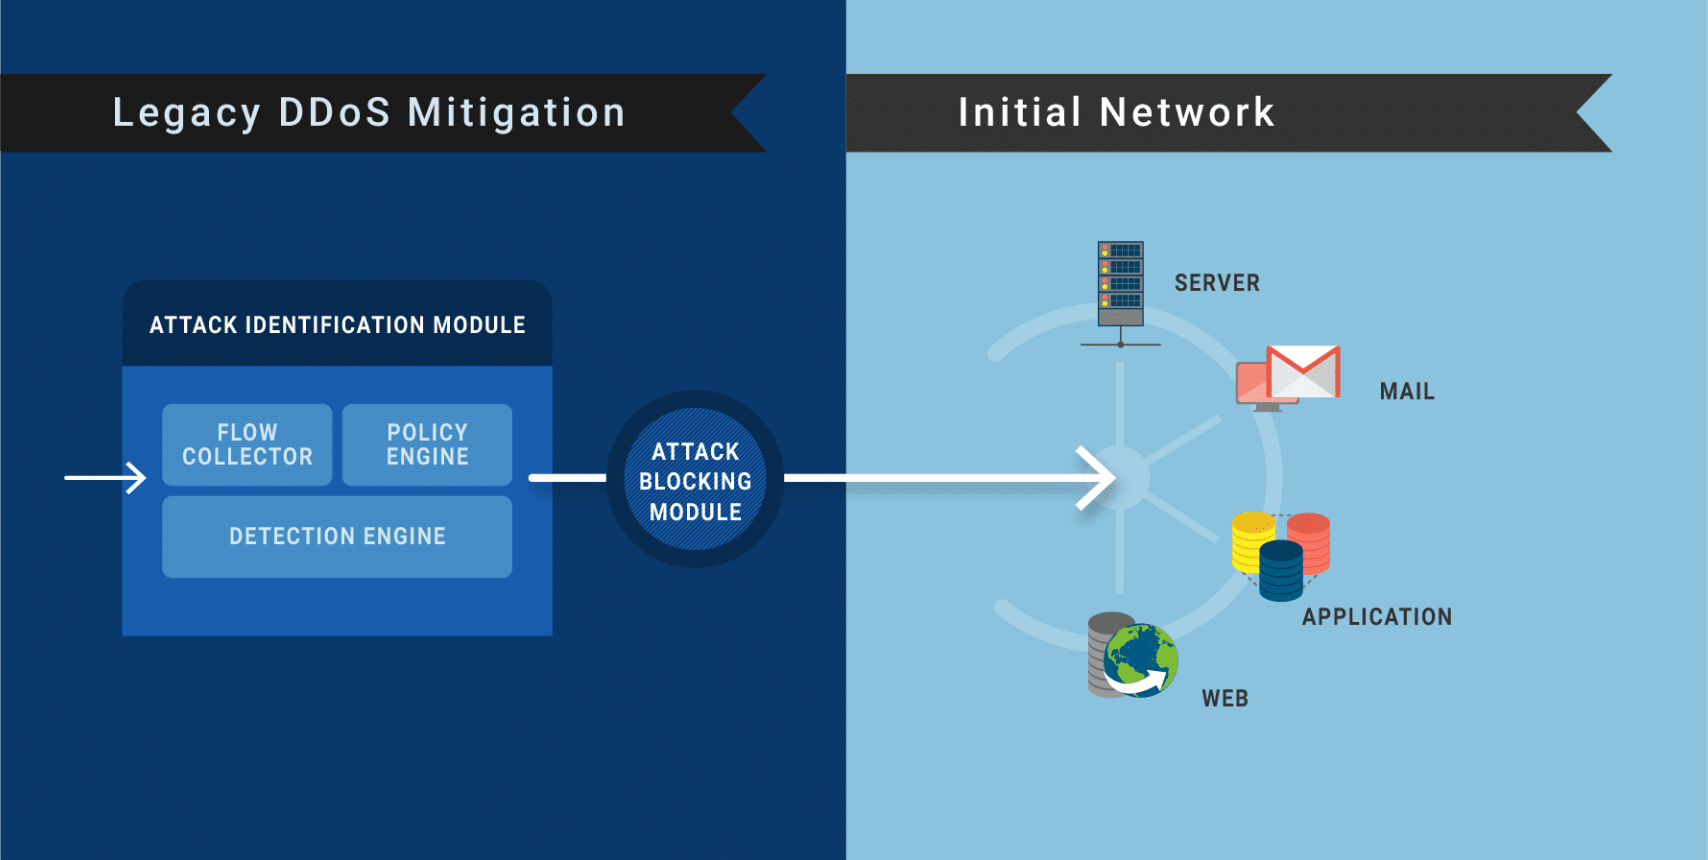 DDoS Mitigation Configuration When Deployed